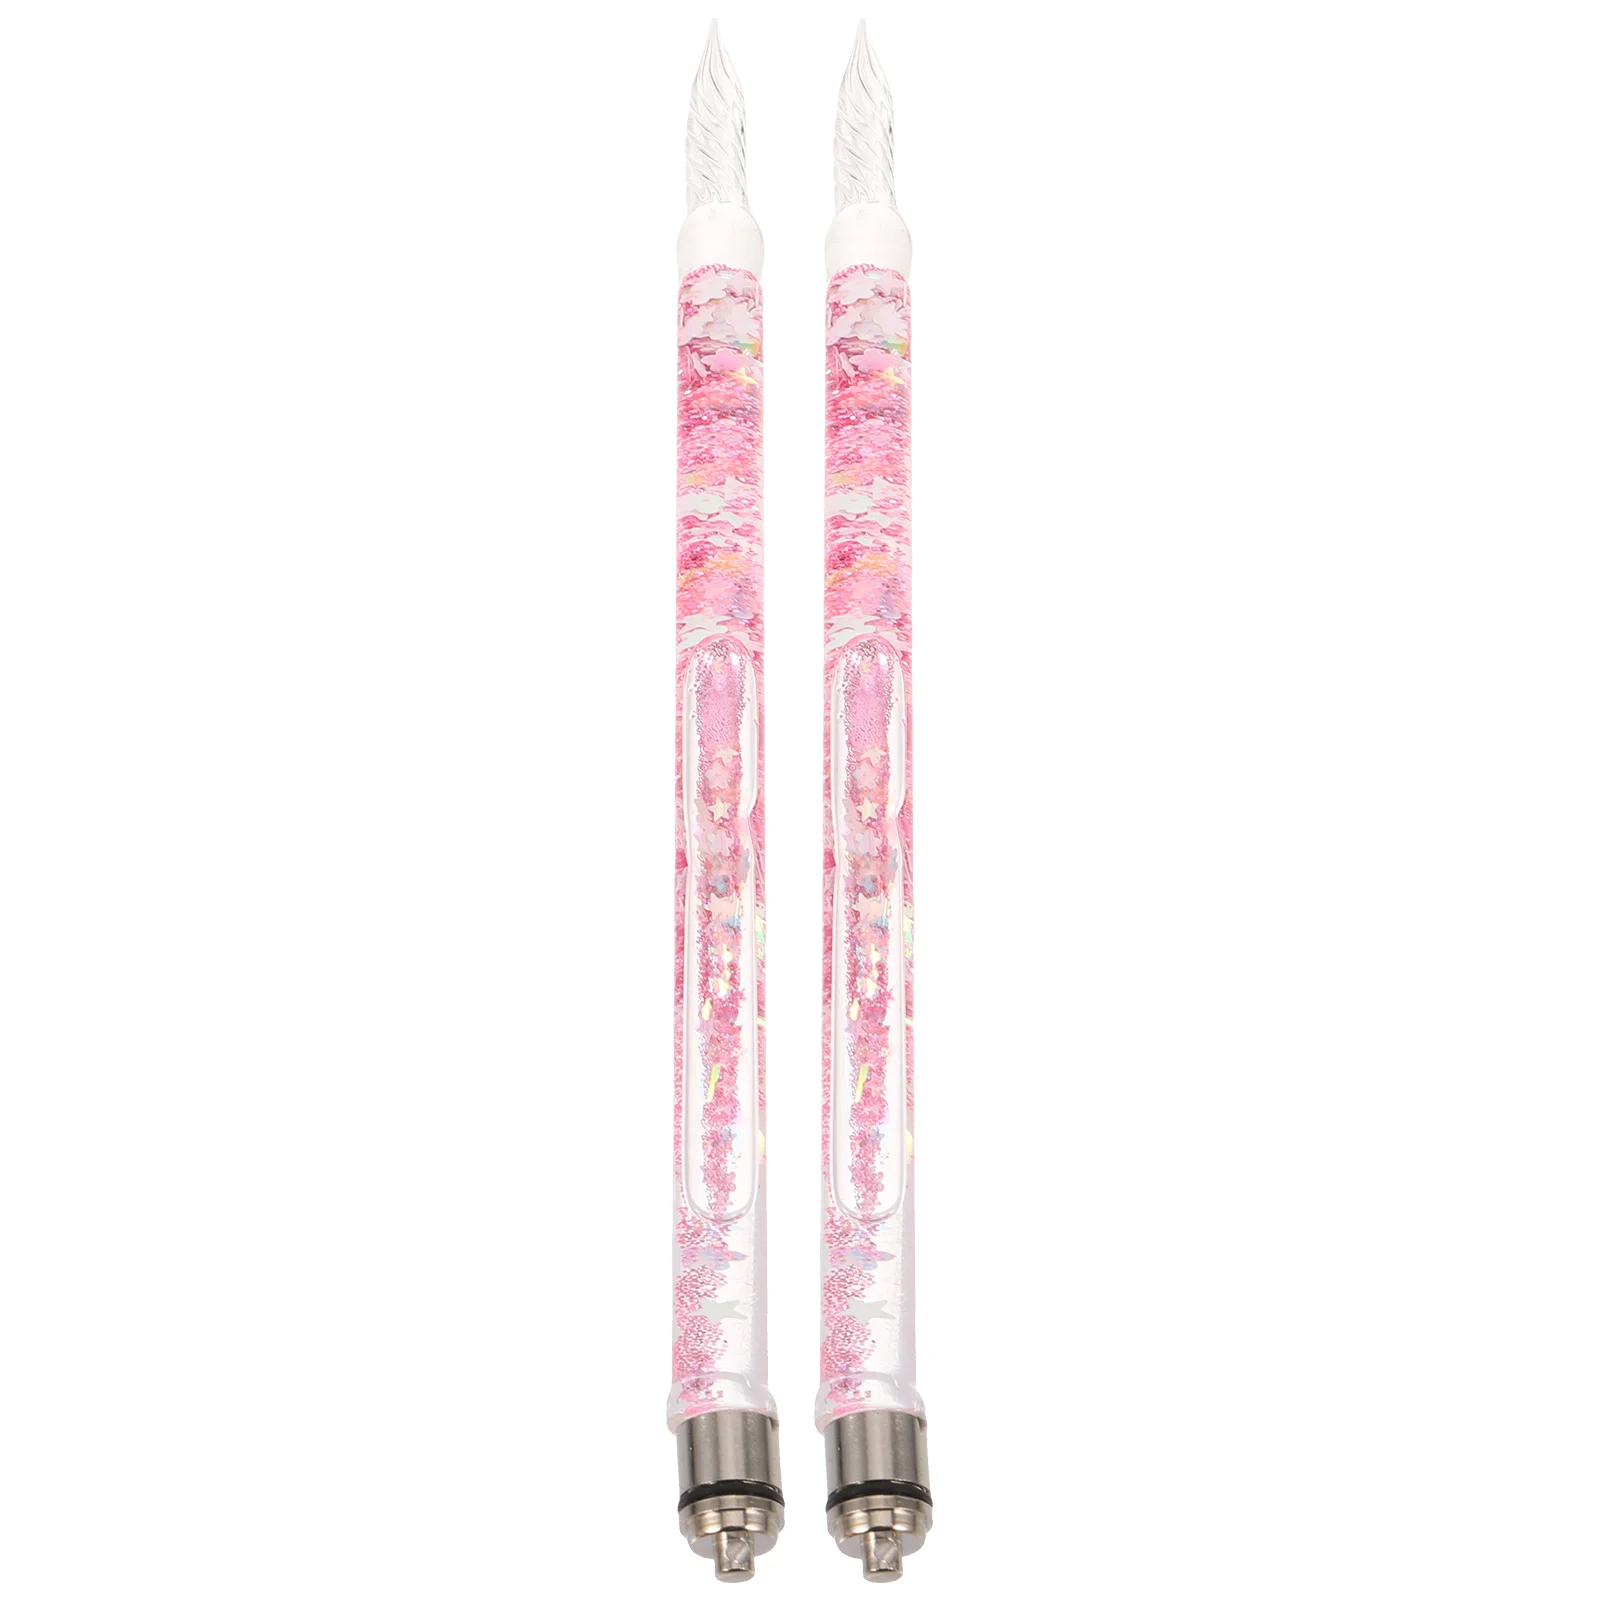 2 Pcs Glass Pen Dipped in Water Desktop Decor Vintage Brush Pens Drawing Painting Decoration